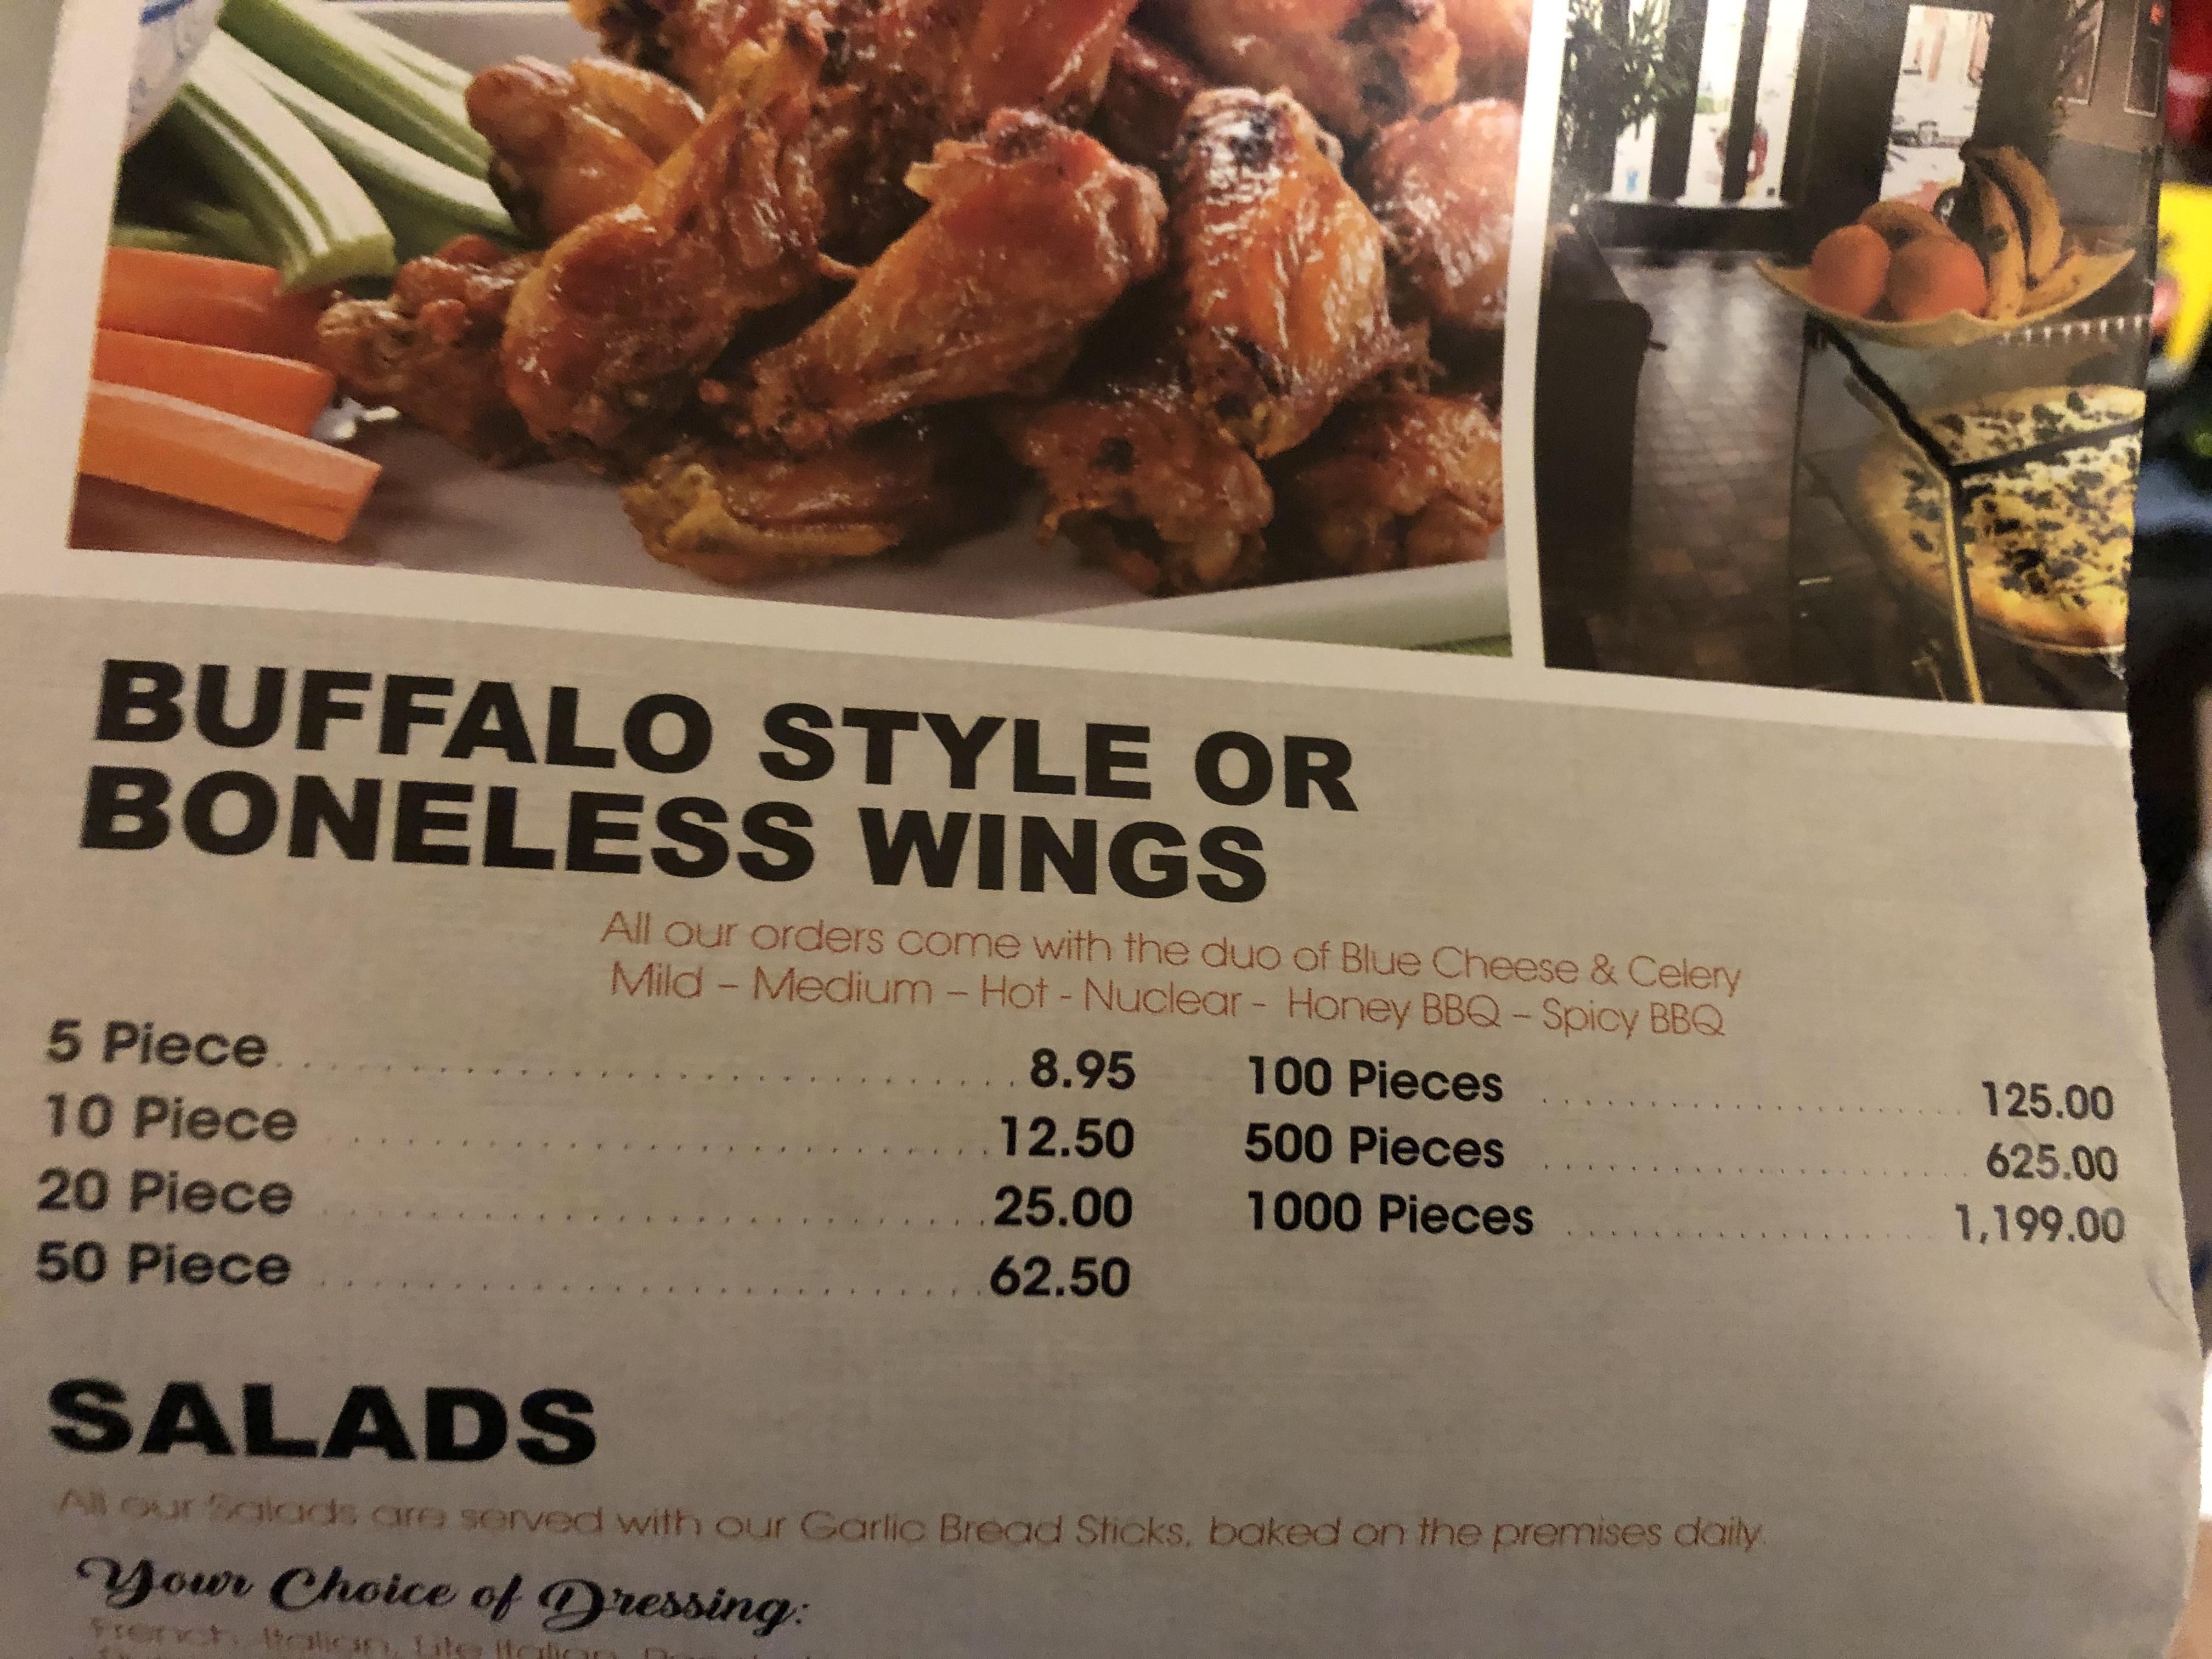 Anybody need 1,000 Buffalo Wings?